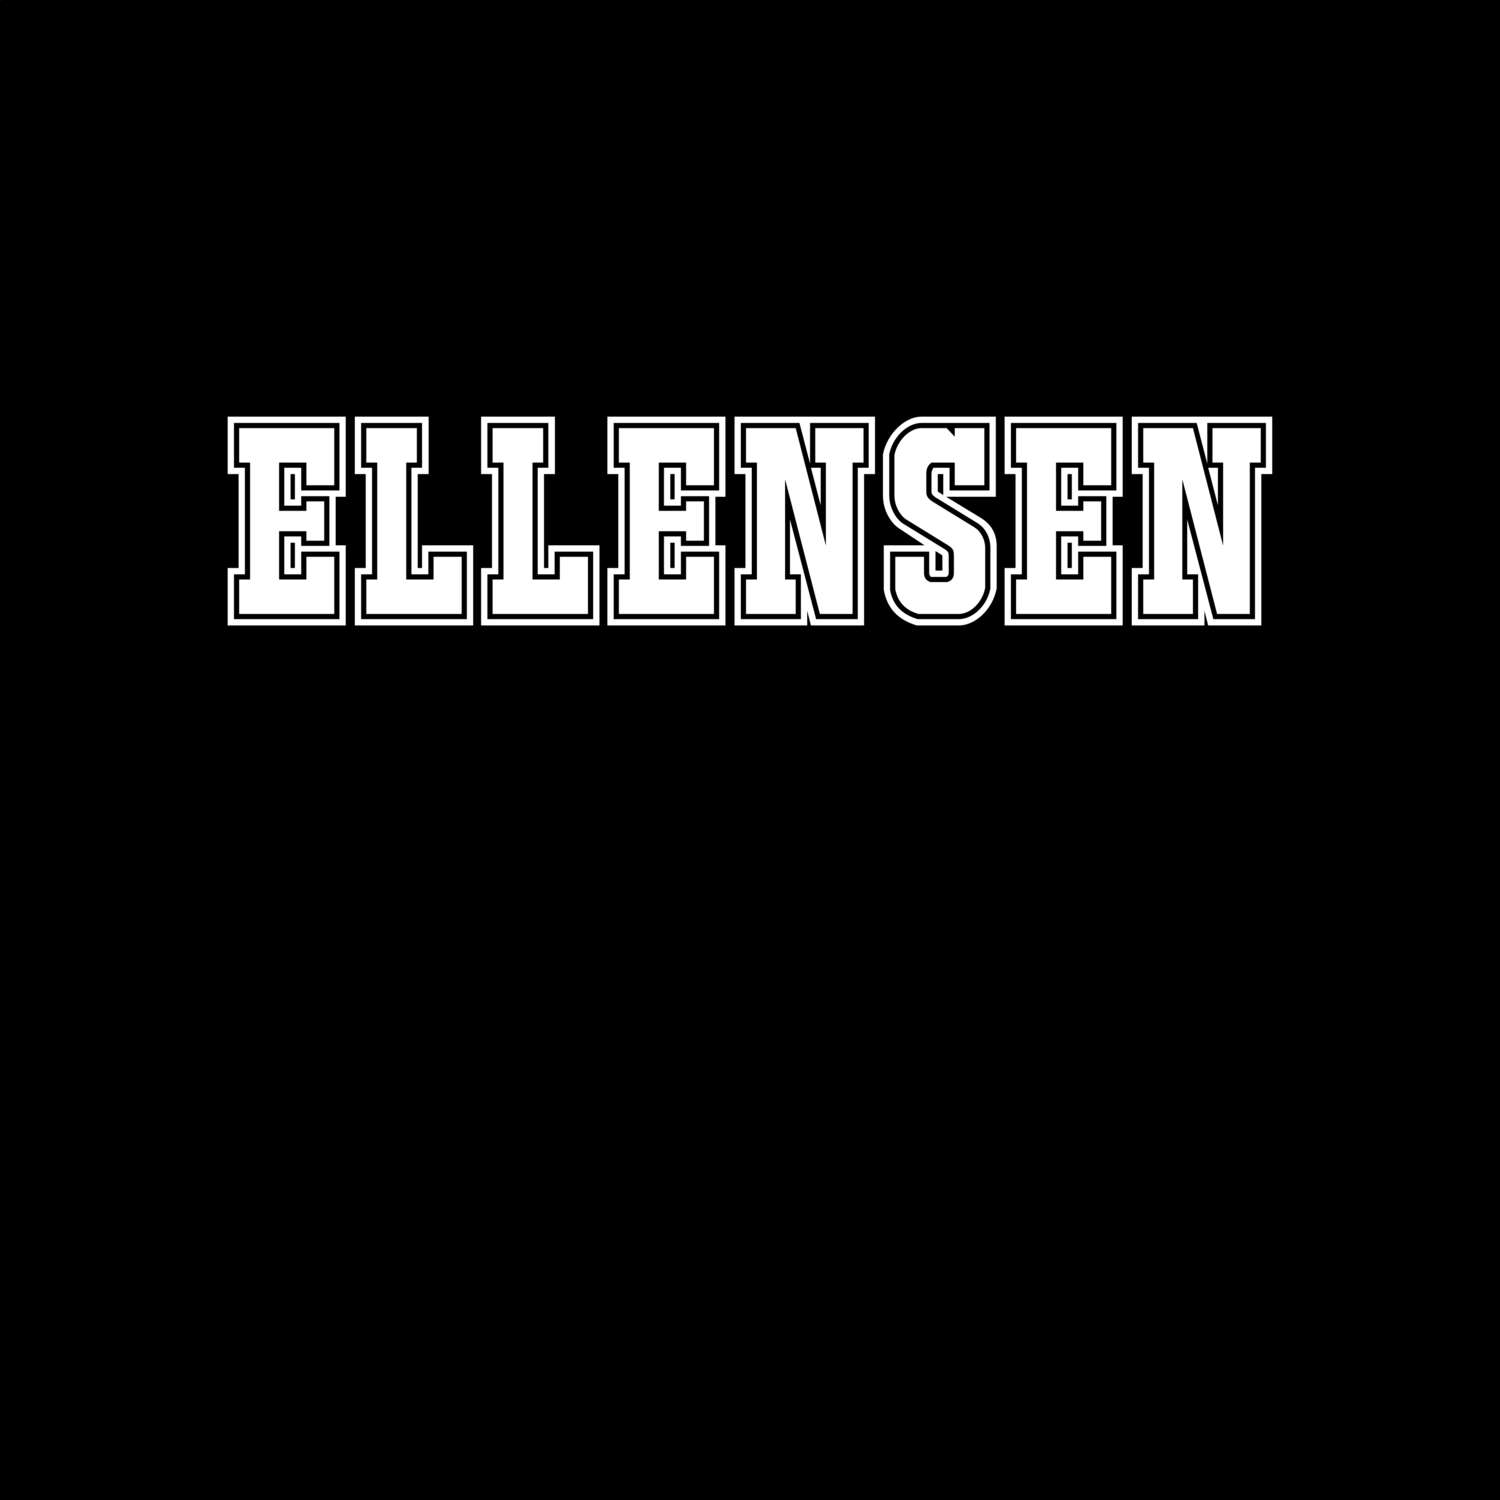 Ellensen T-Shirt »Classic«